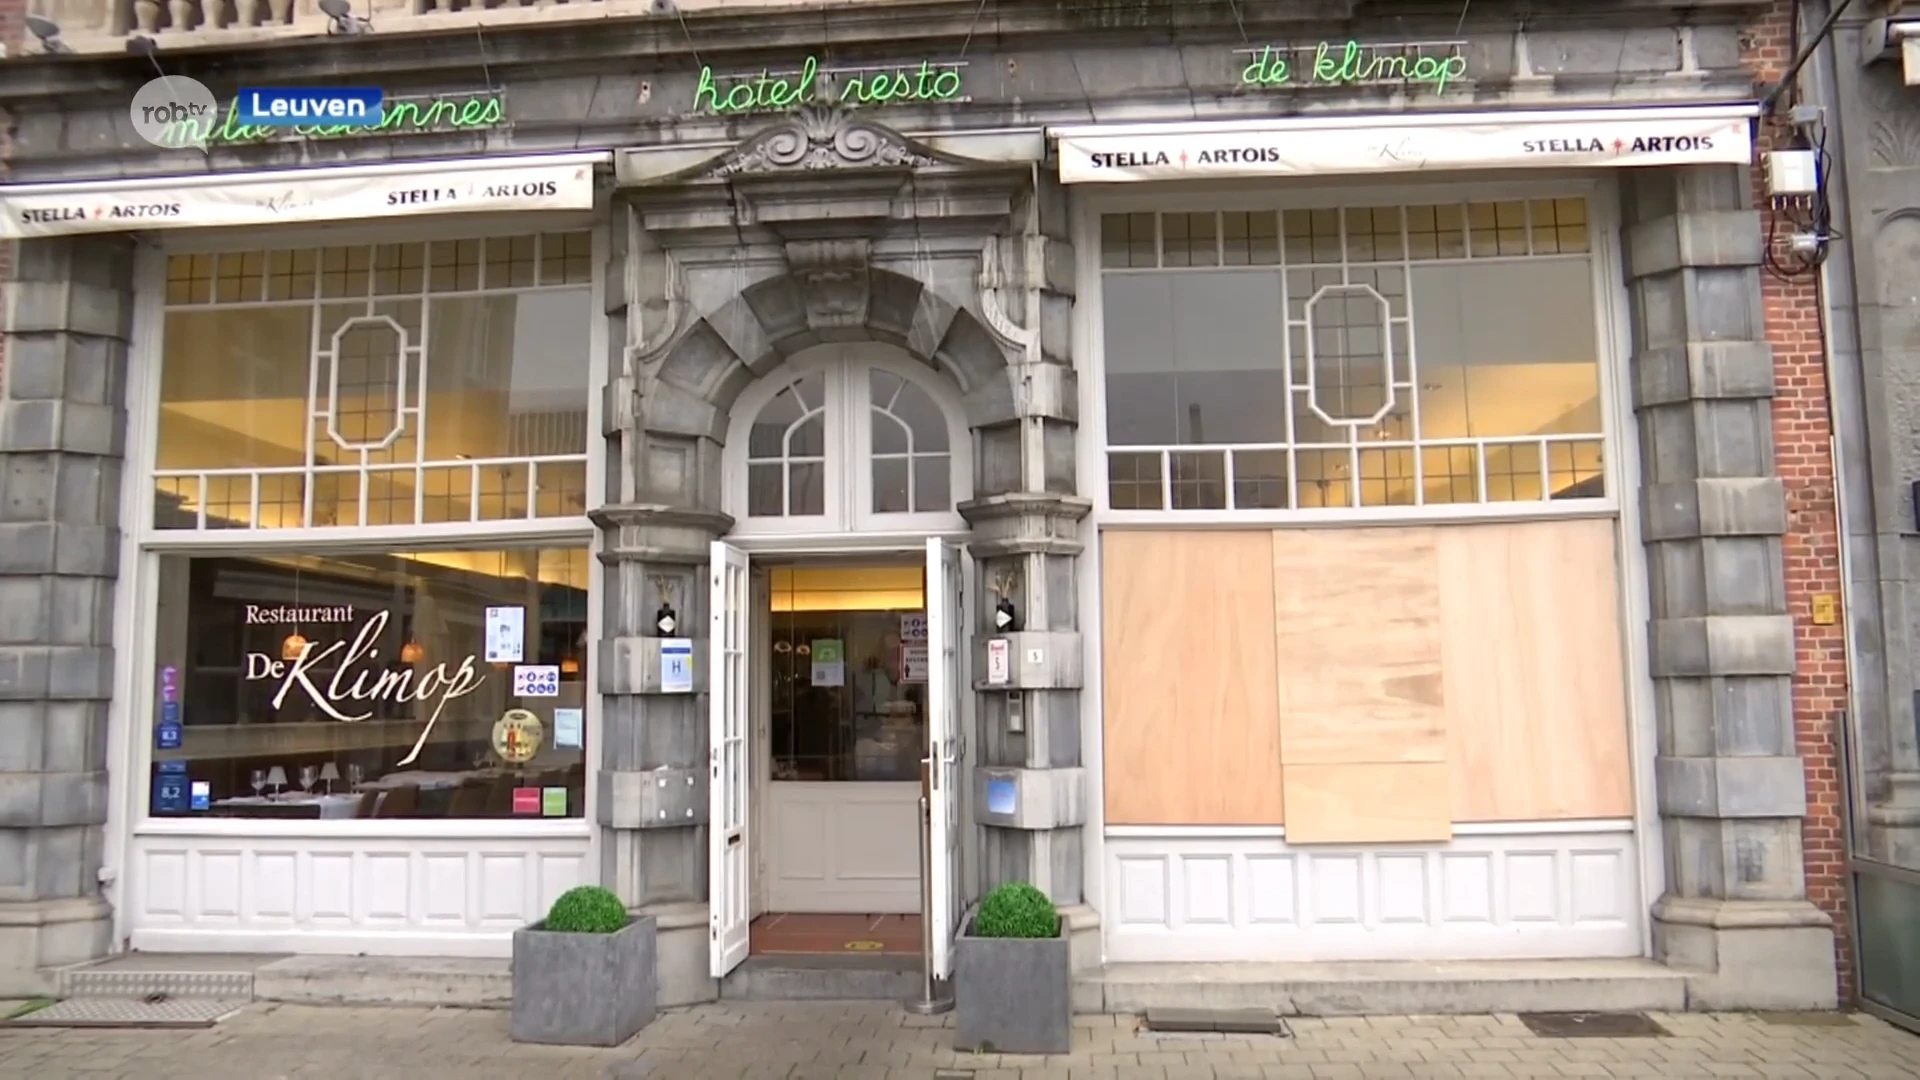 Restaurant in Leuven vernield om elektrische fiets te stelen